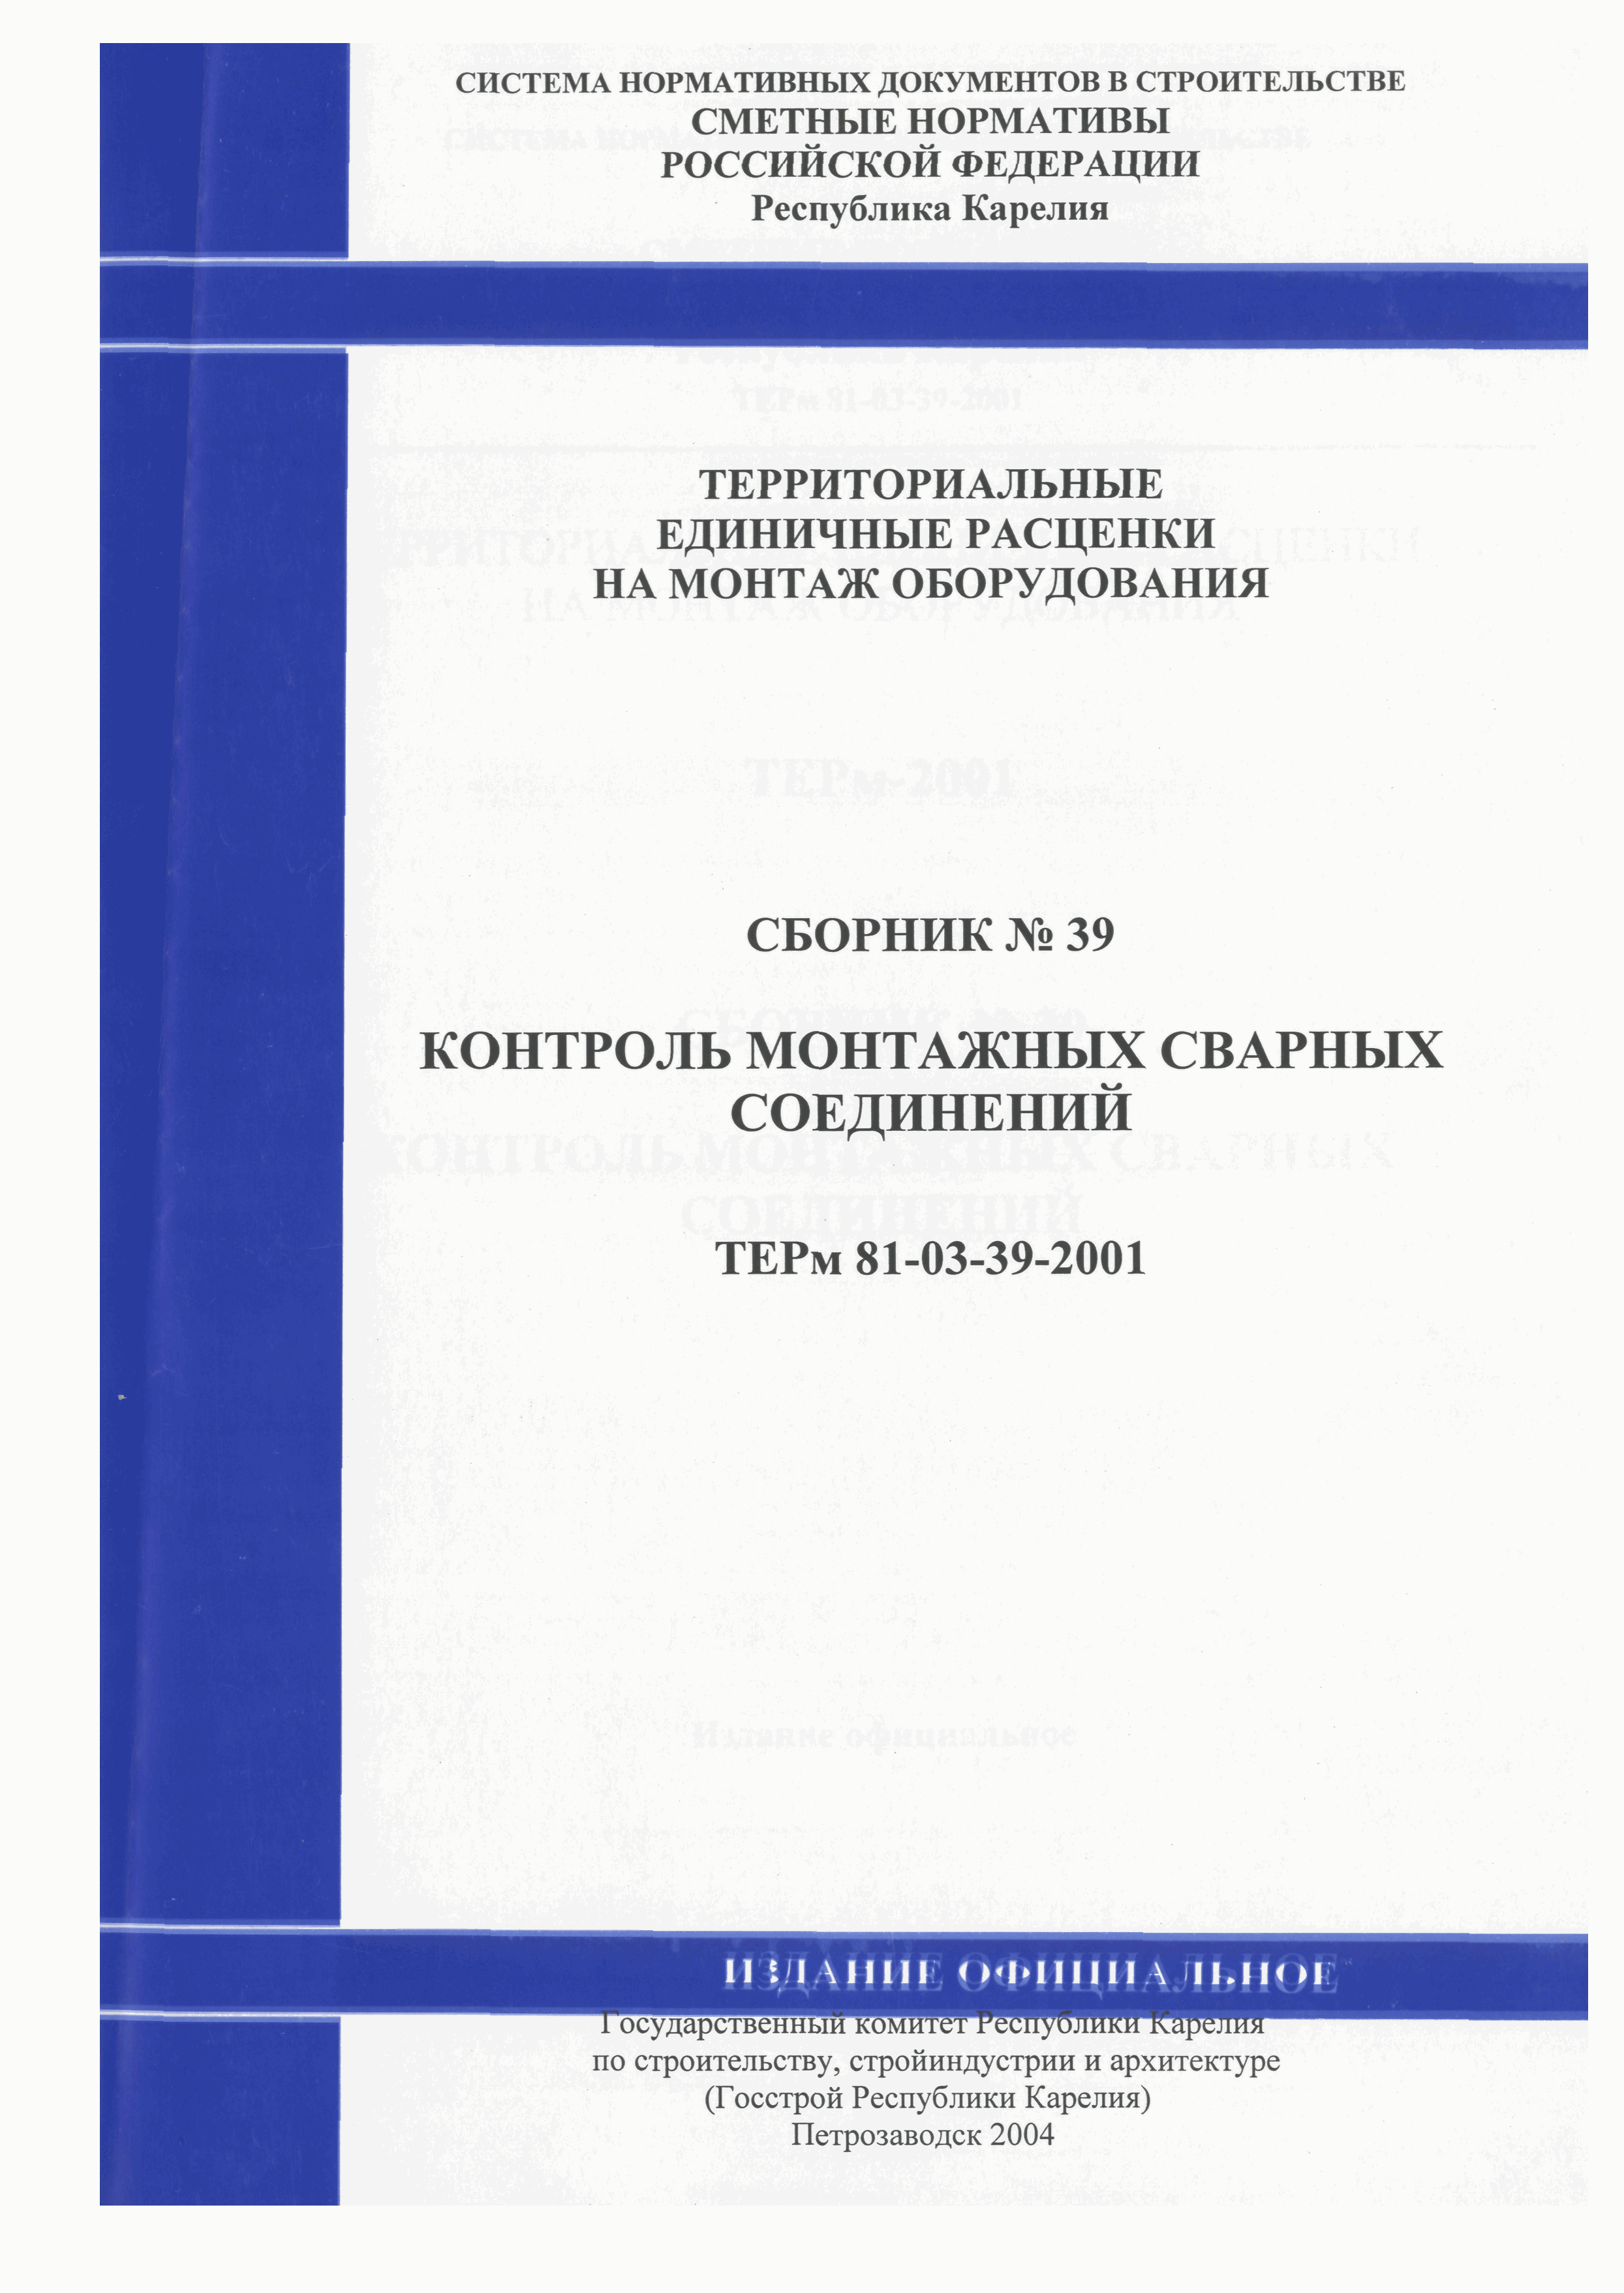 ТЕРм Республика Карелия 2001-39